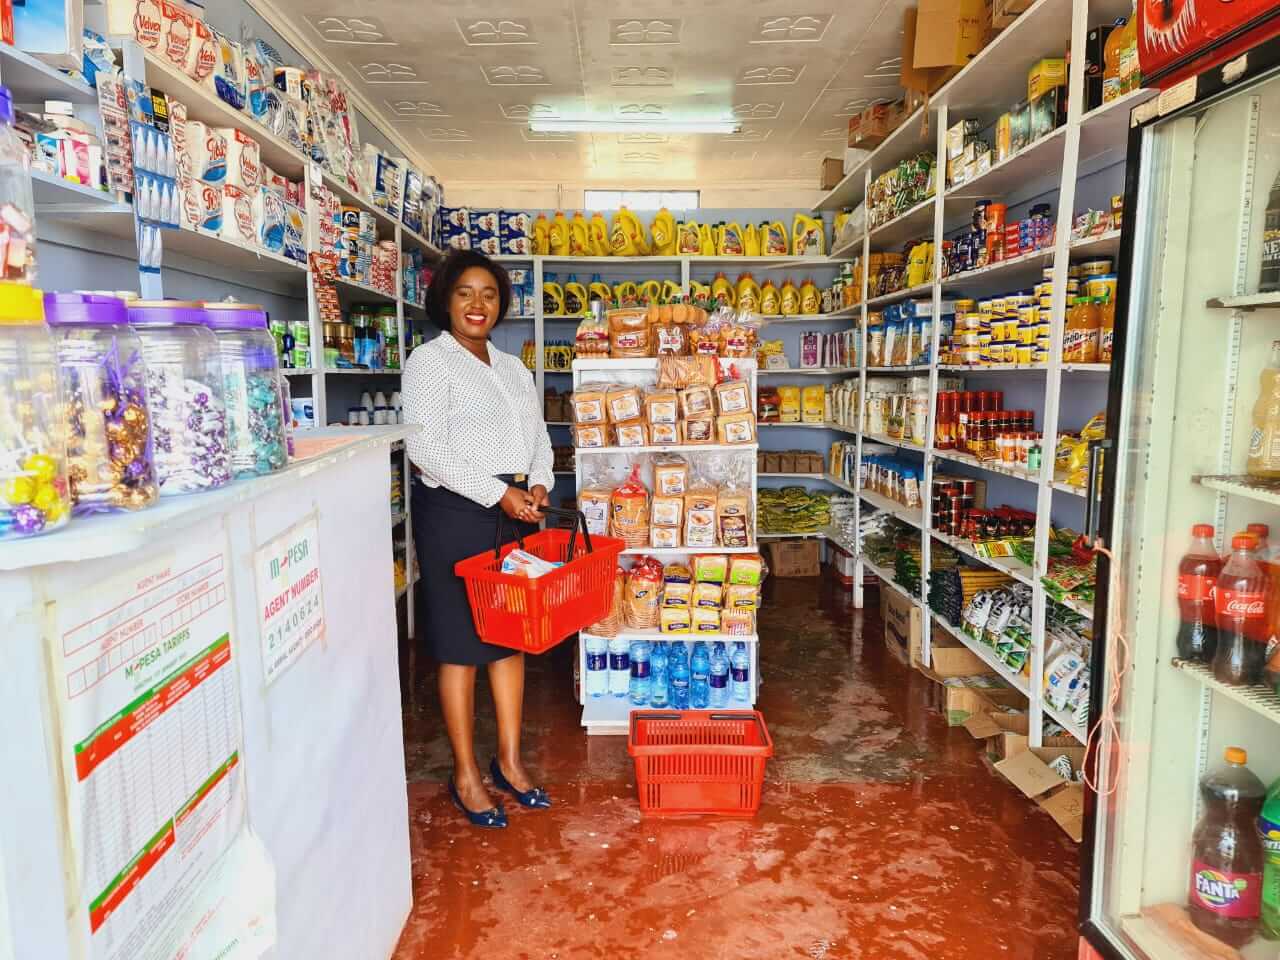 Gulf Air flight attendant opens supermarket in Kenya